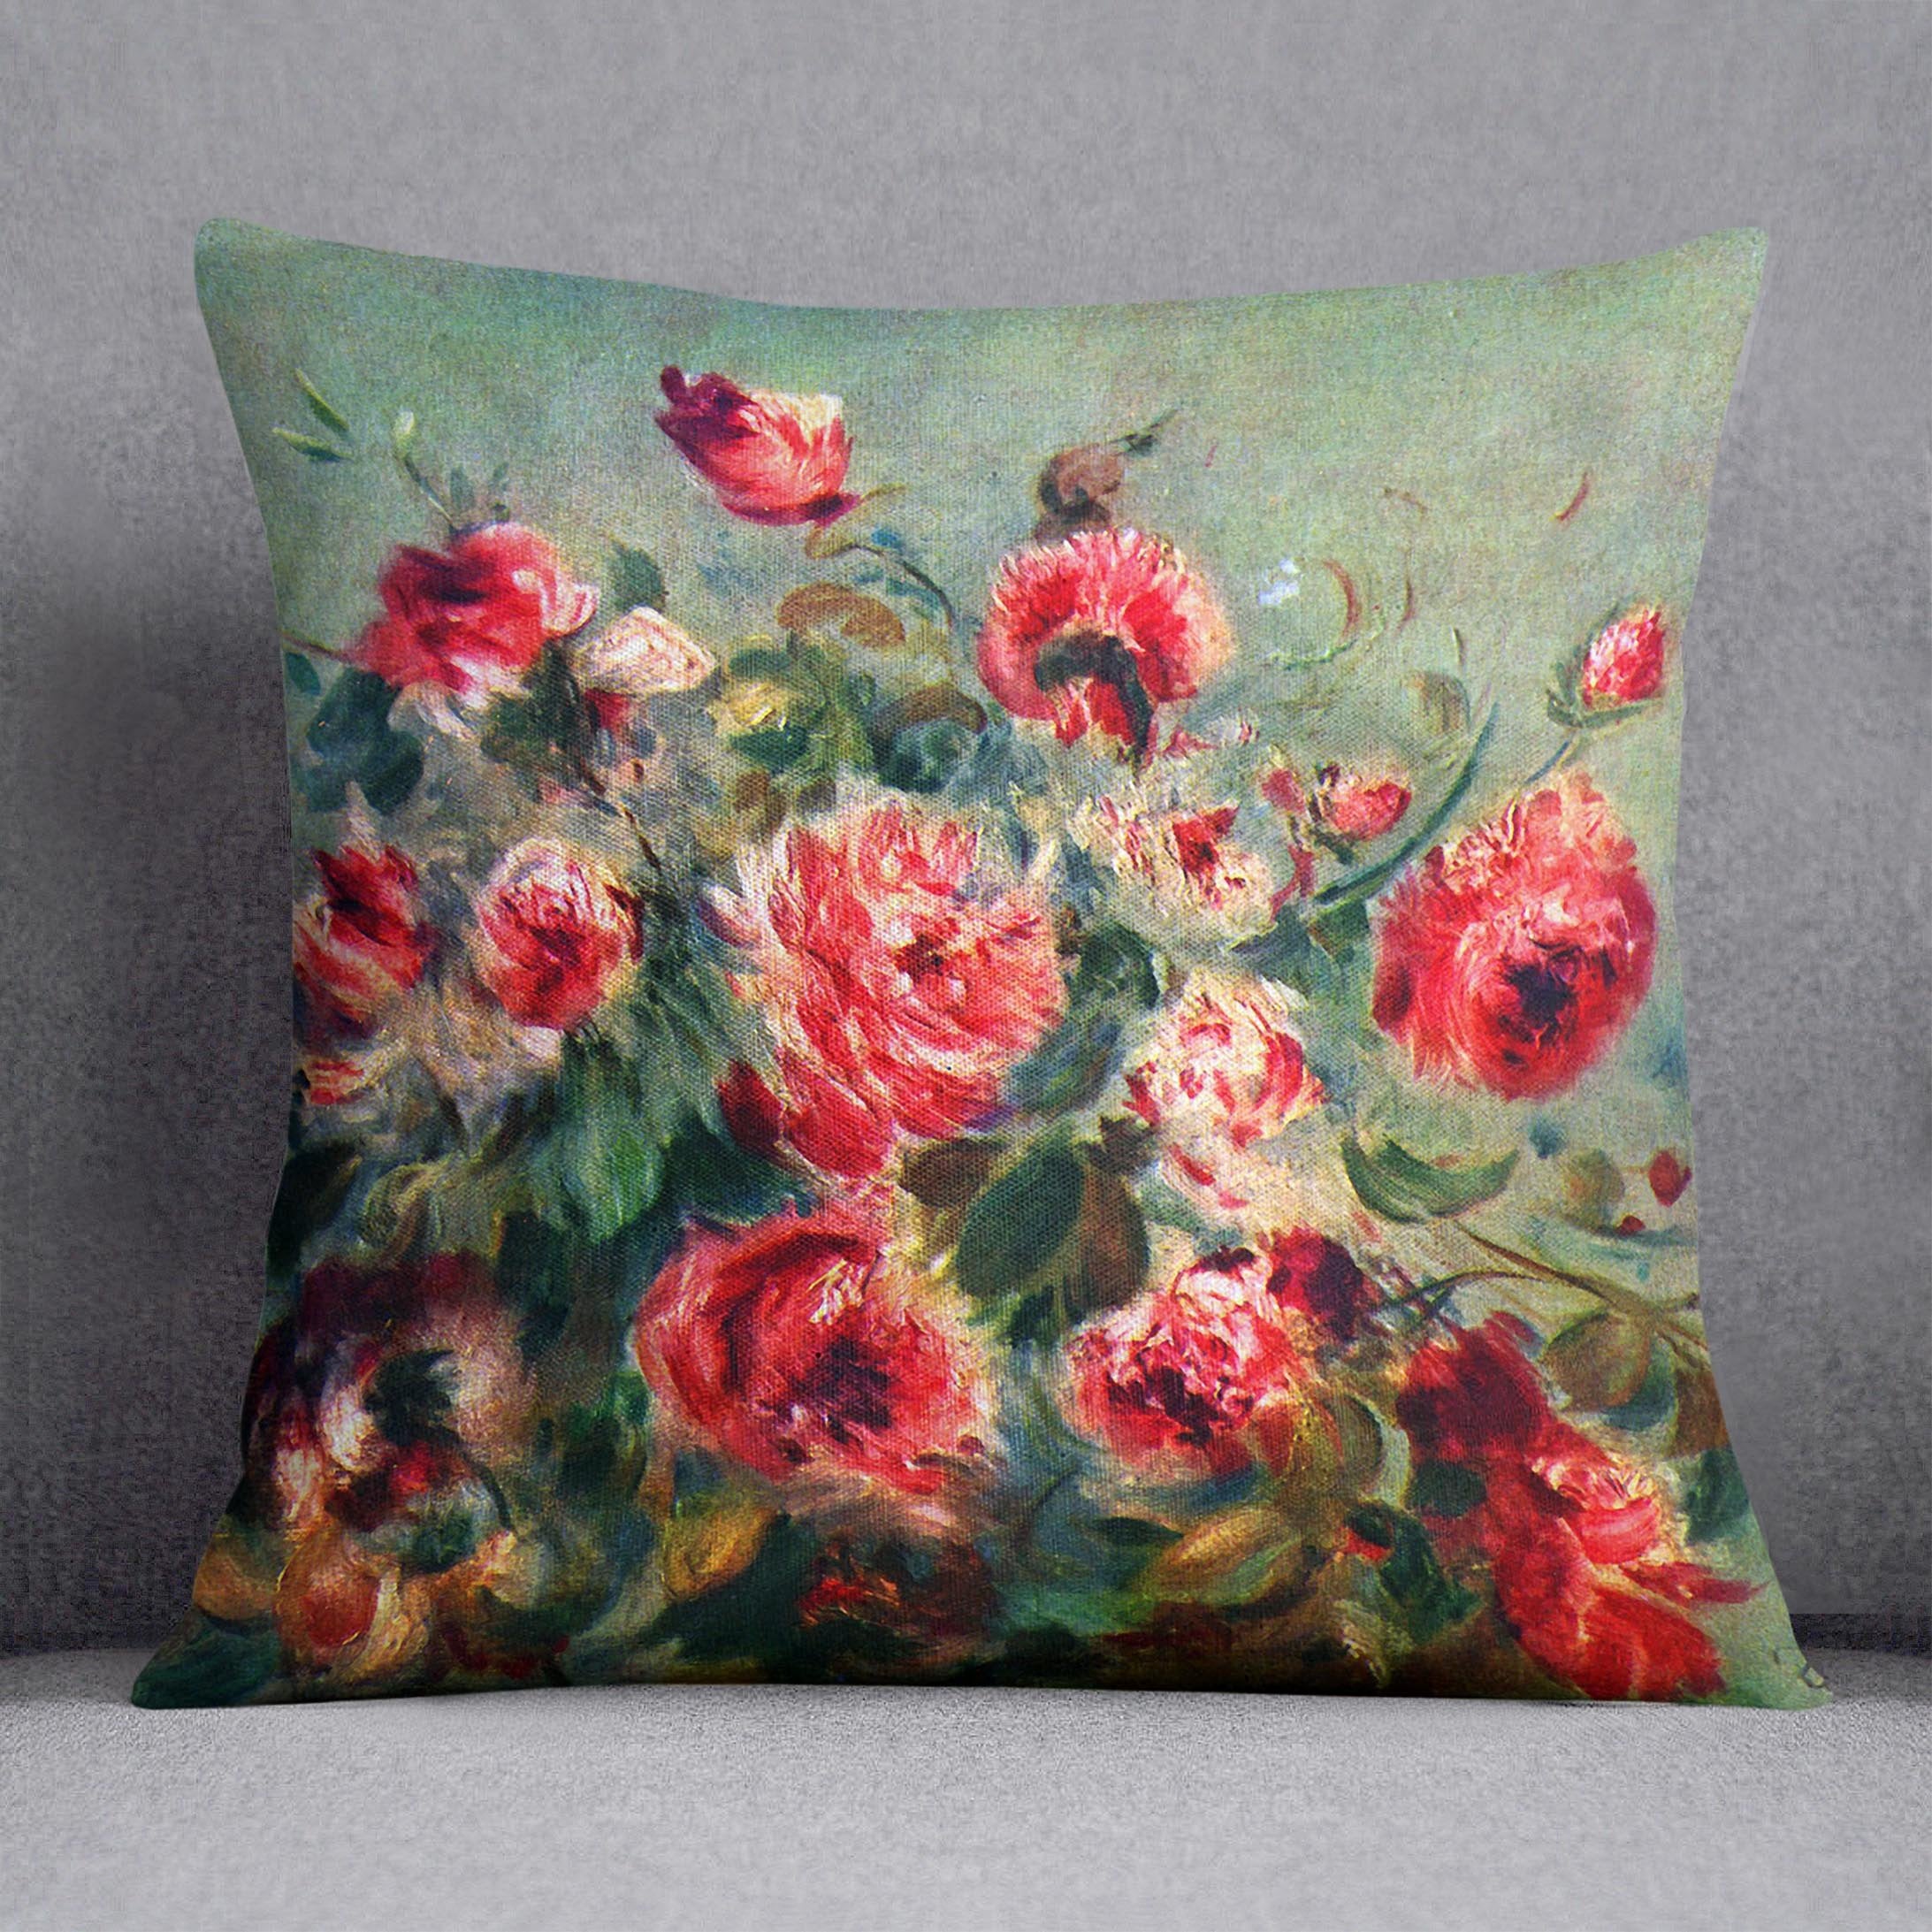 Still life roses of Vargemont by Renoir Throw Pillow